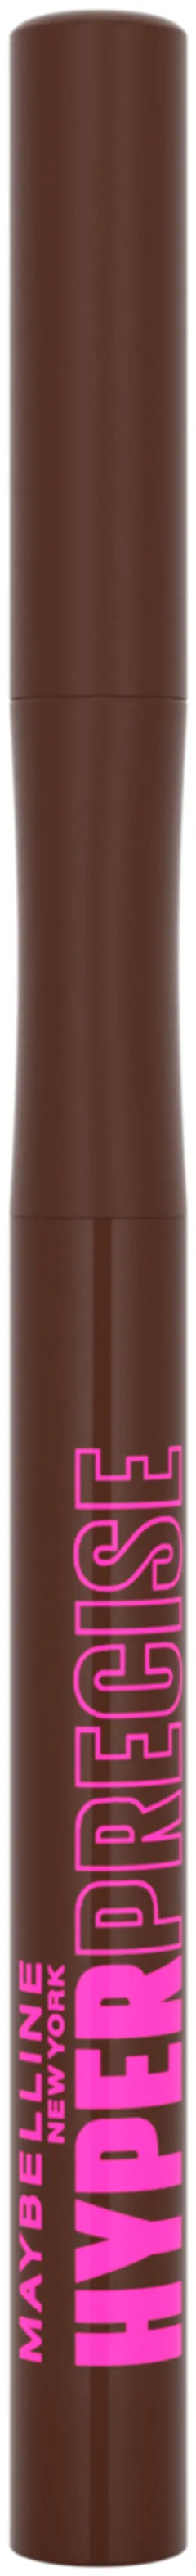 Maybelline New York Hyper Precise Liquid Liner 710 Forest Brown nestemäinen silmänrajauskynä 1ml - 710 Forest Brown - 2